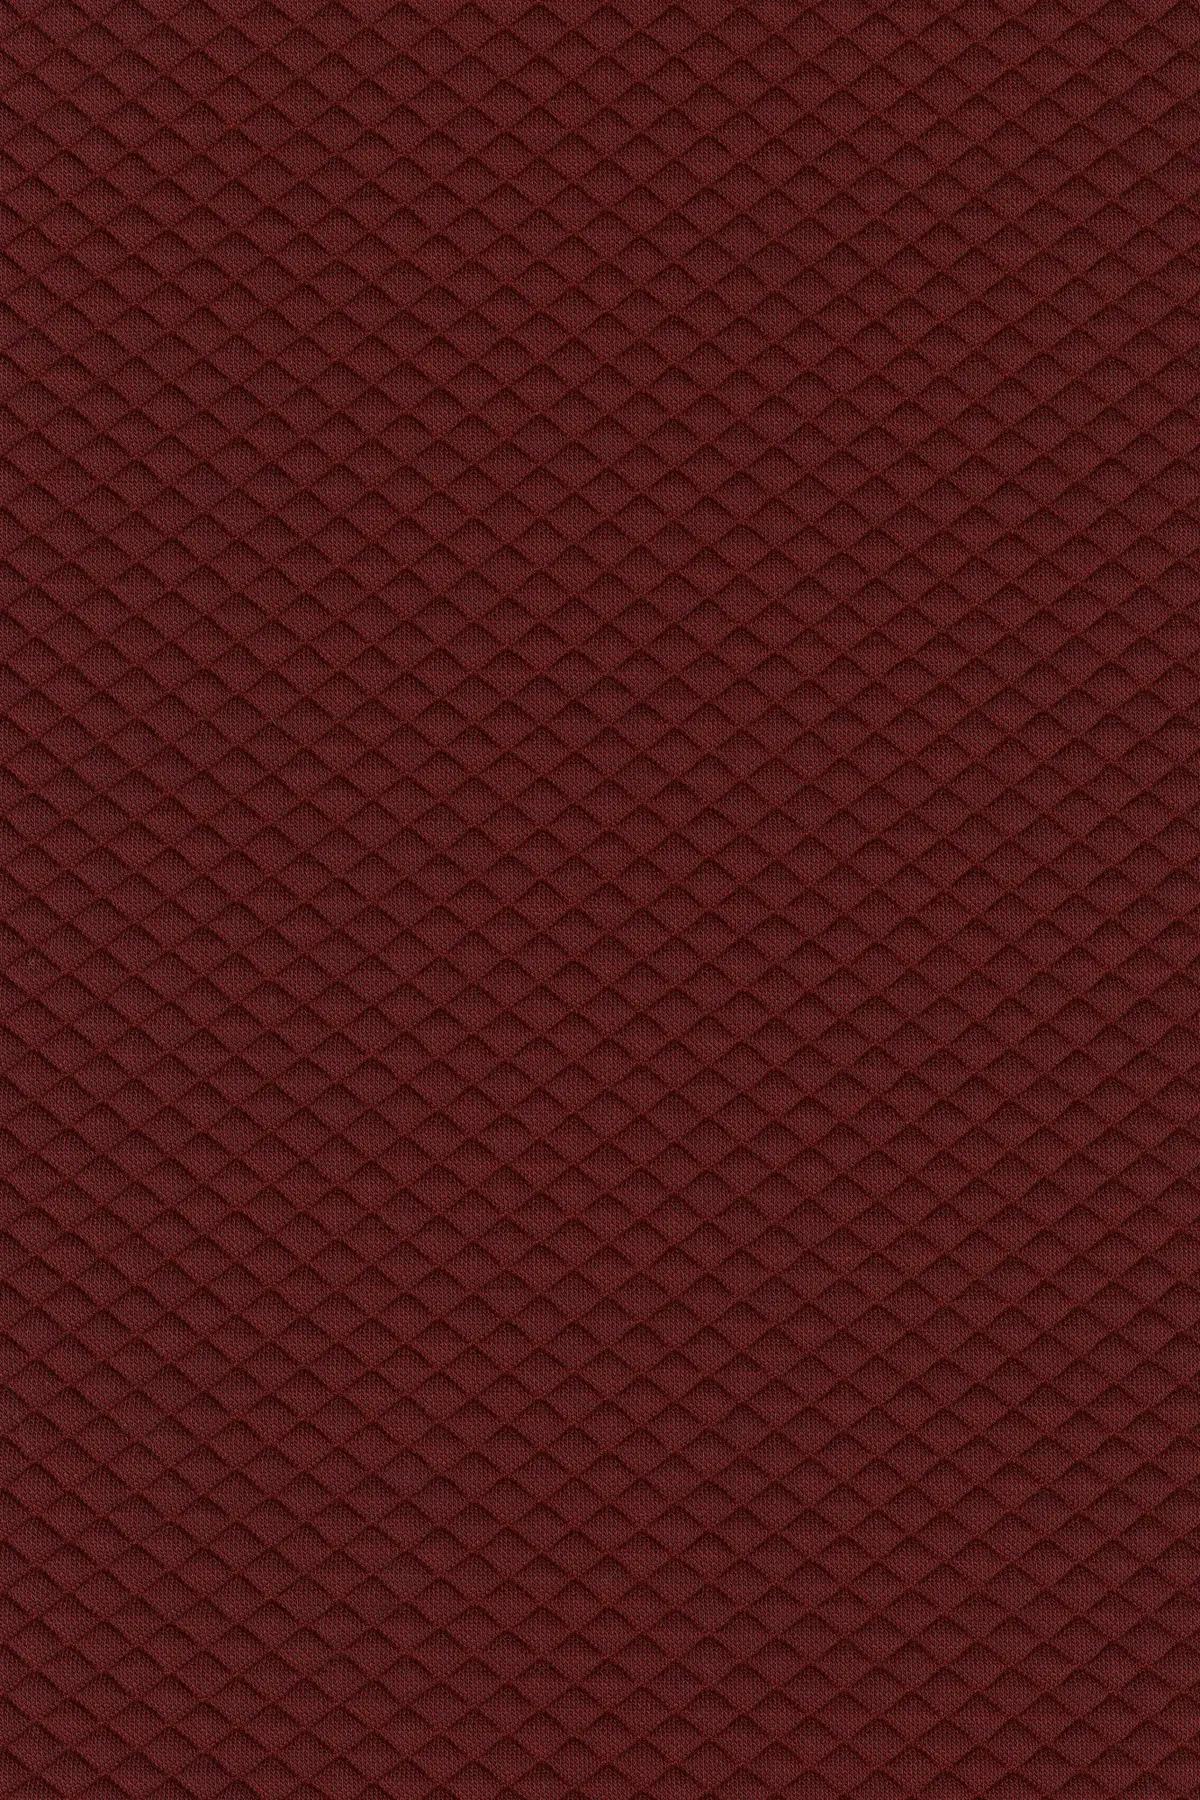 Fabric sample Mosaic 2 0662 red